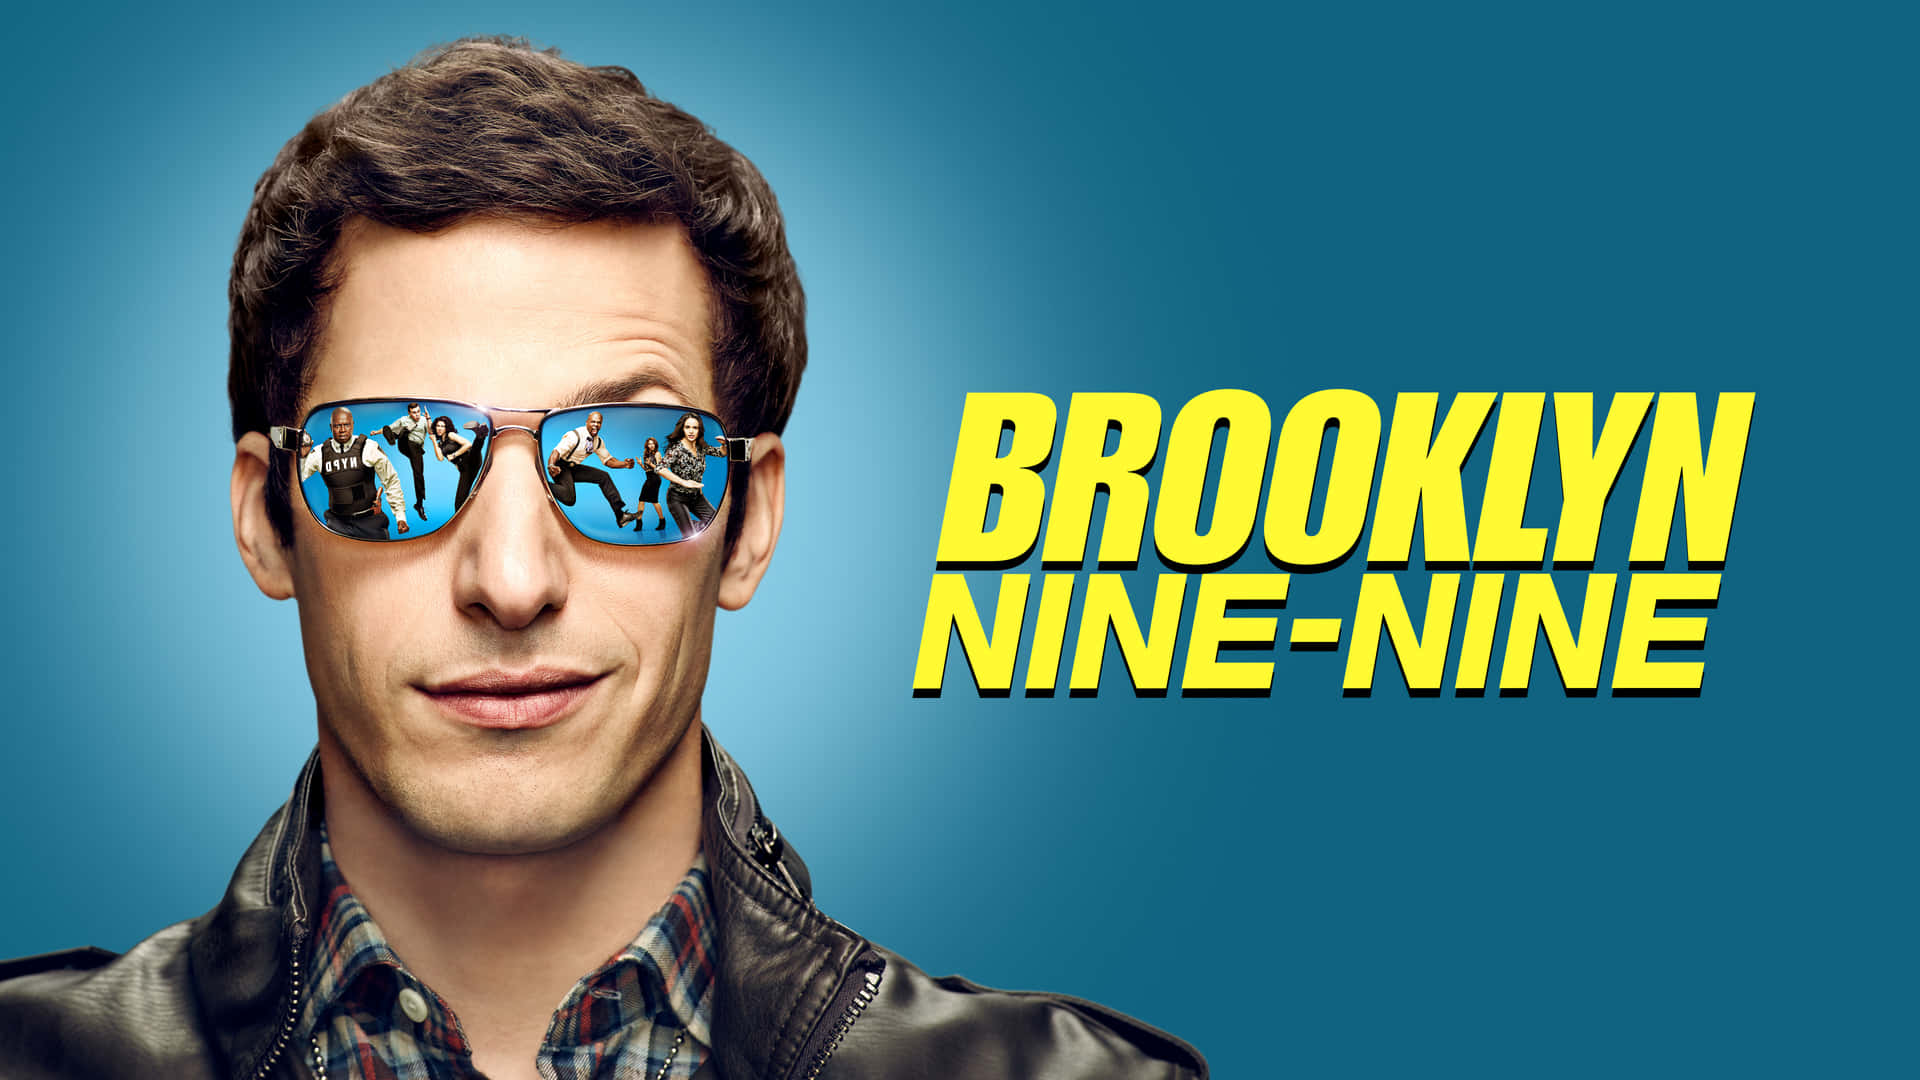 Brooklynnine-nine - Staffel 1